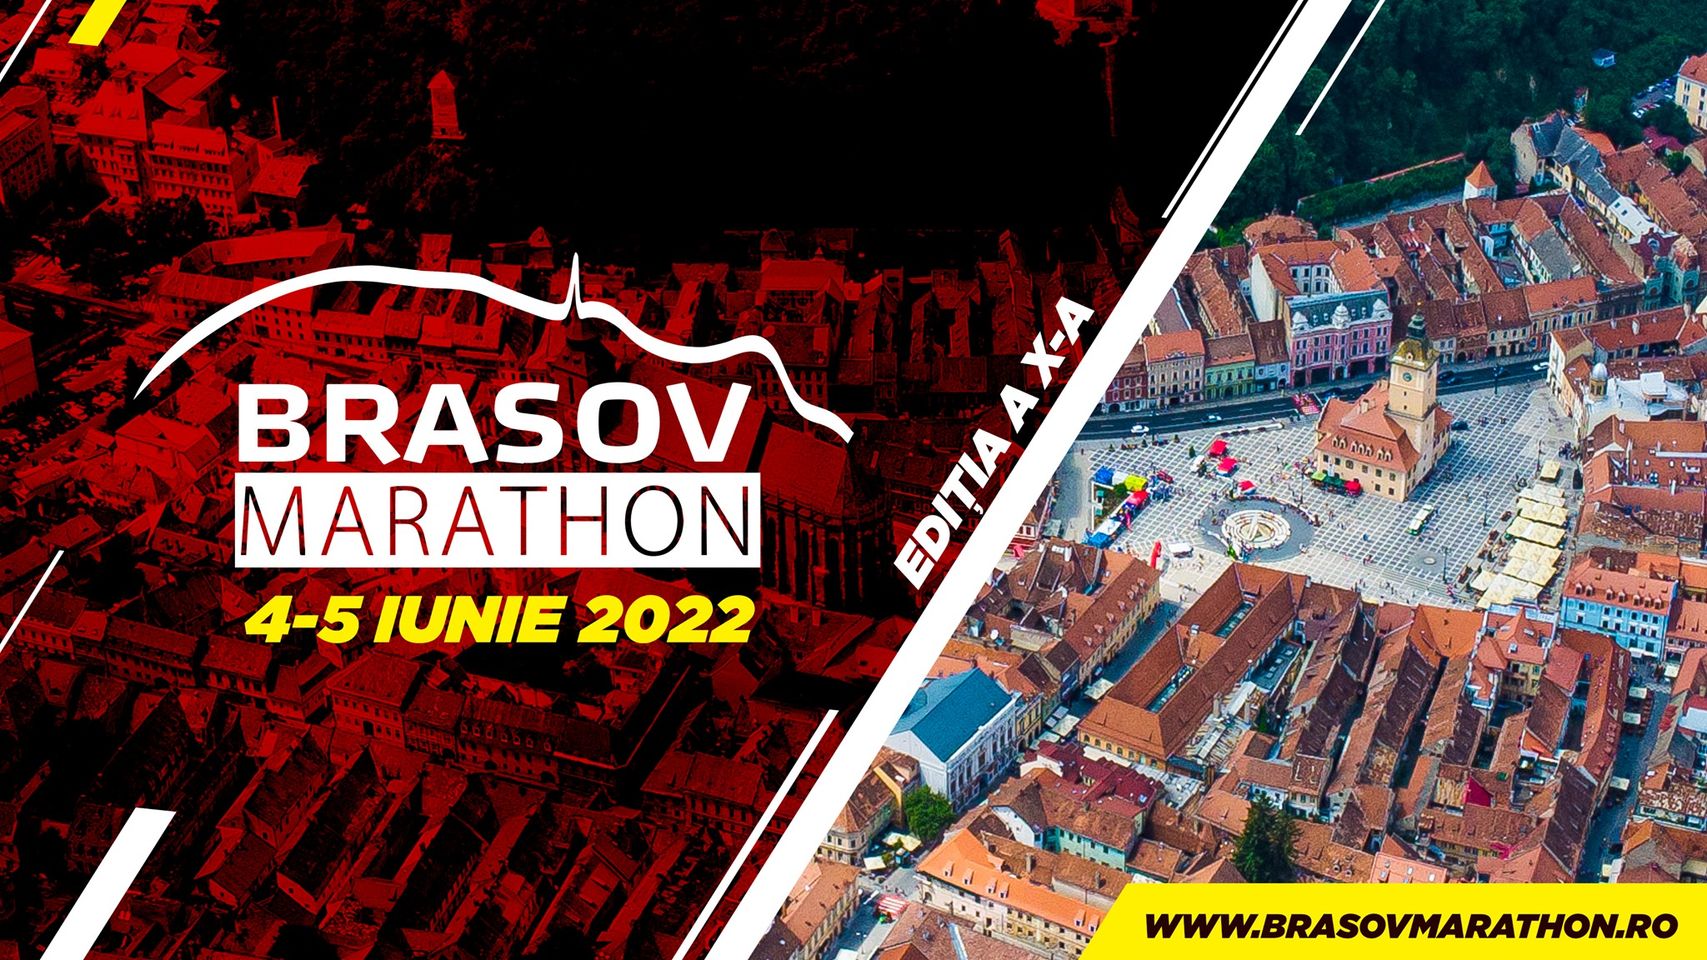 Brasov Marathon 2022